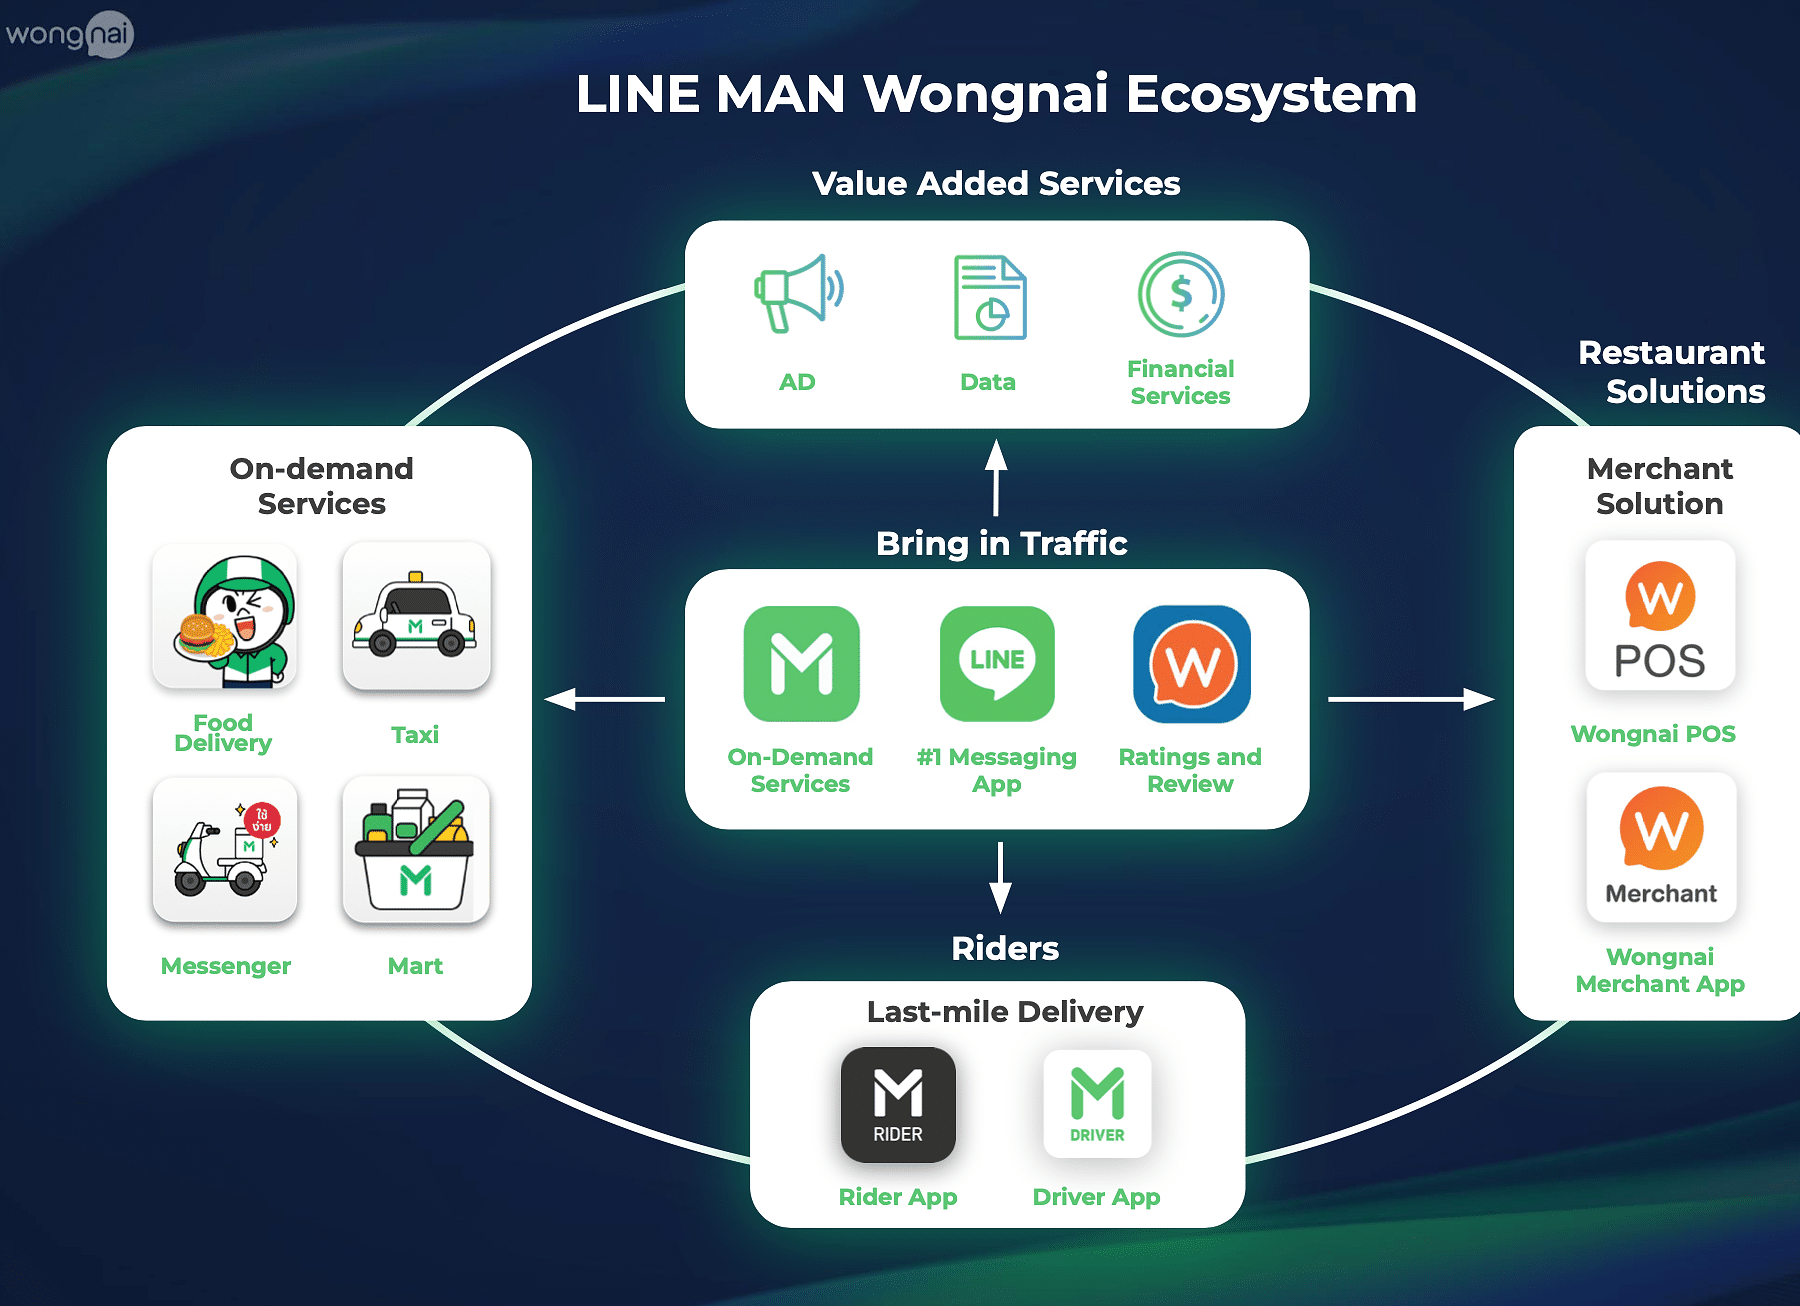 LINE MAN Wongnai กางแผนดึง Tech Talent ลุยสร้างบริการ Made in Thailand ย้ำภาพบริษัทเทคโนโลยีที่ใหญ่ที่สุดในไทย 